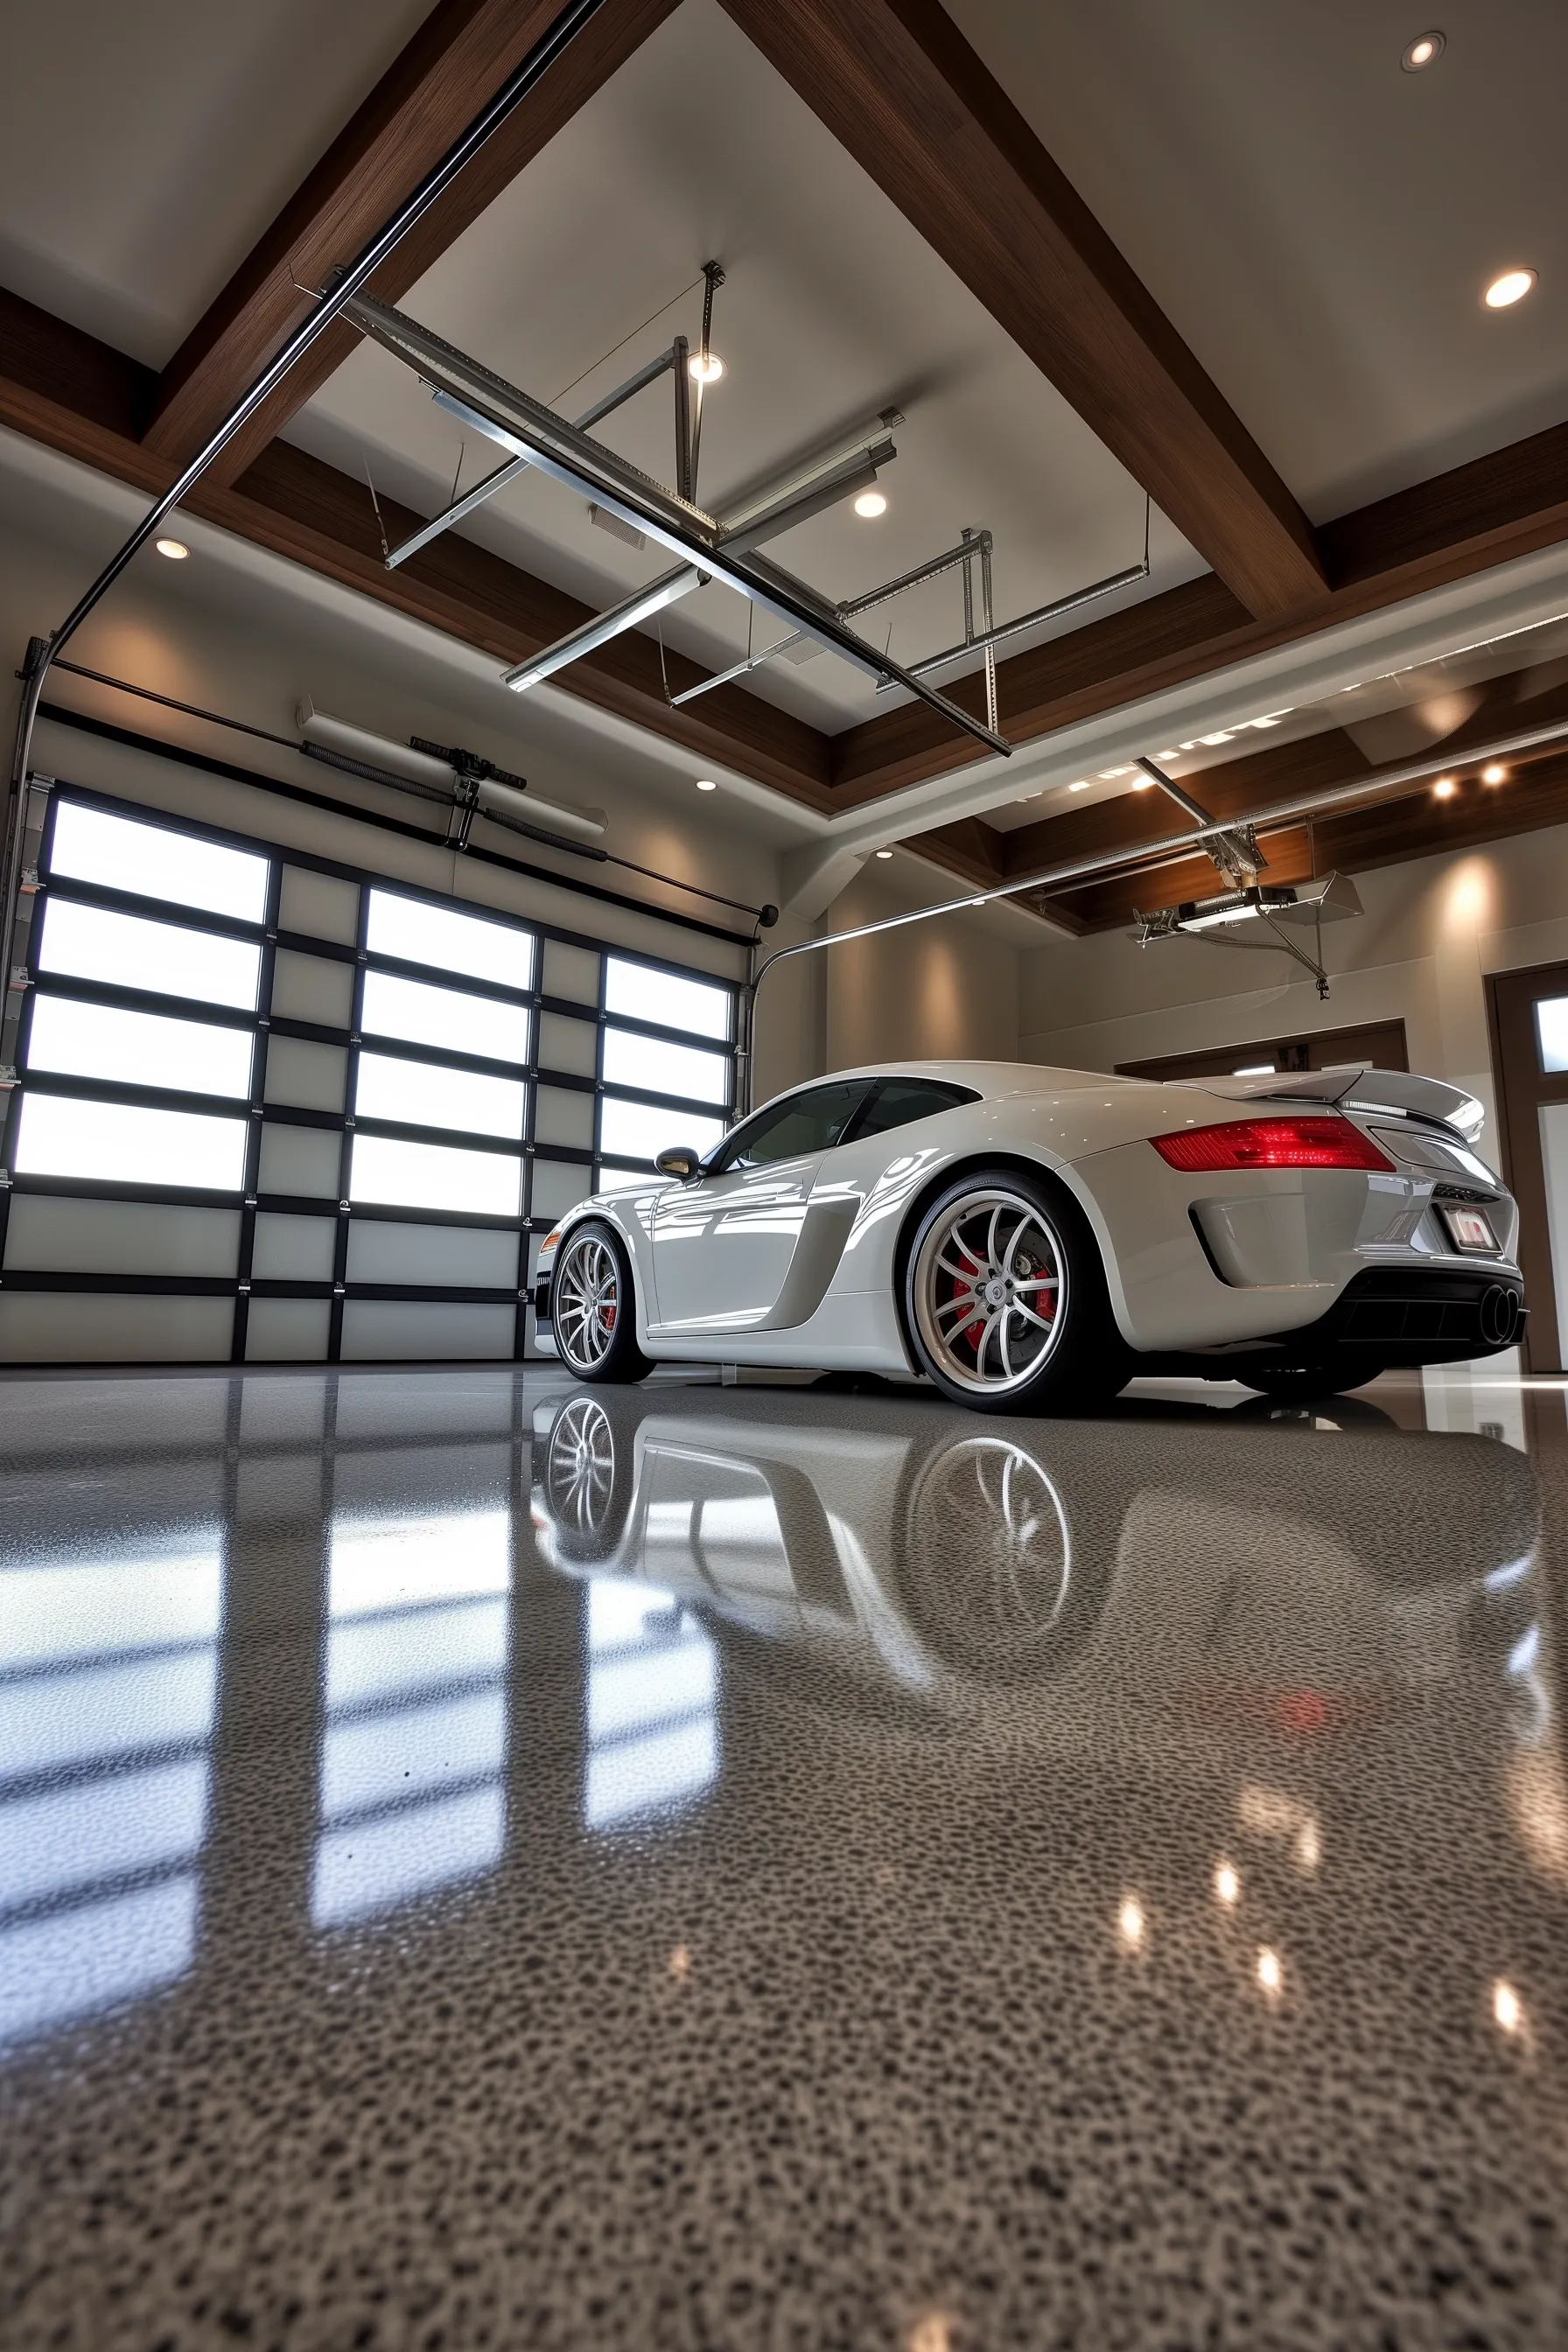 epoxy flooring in garage with white car